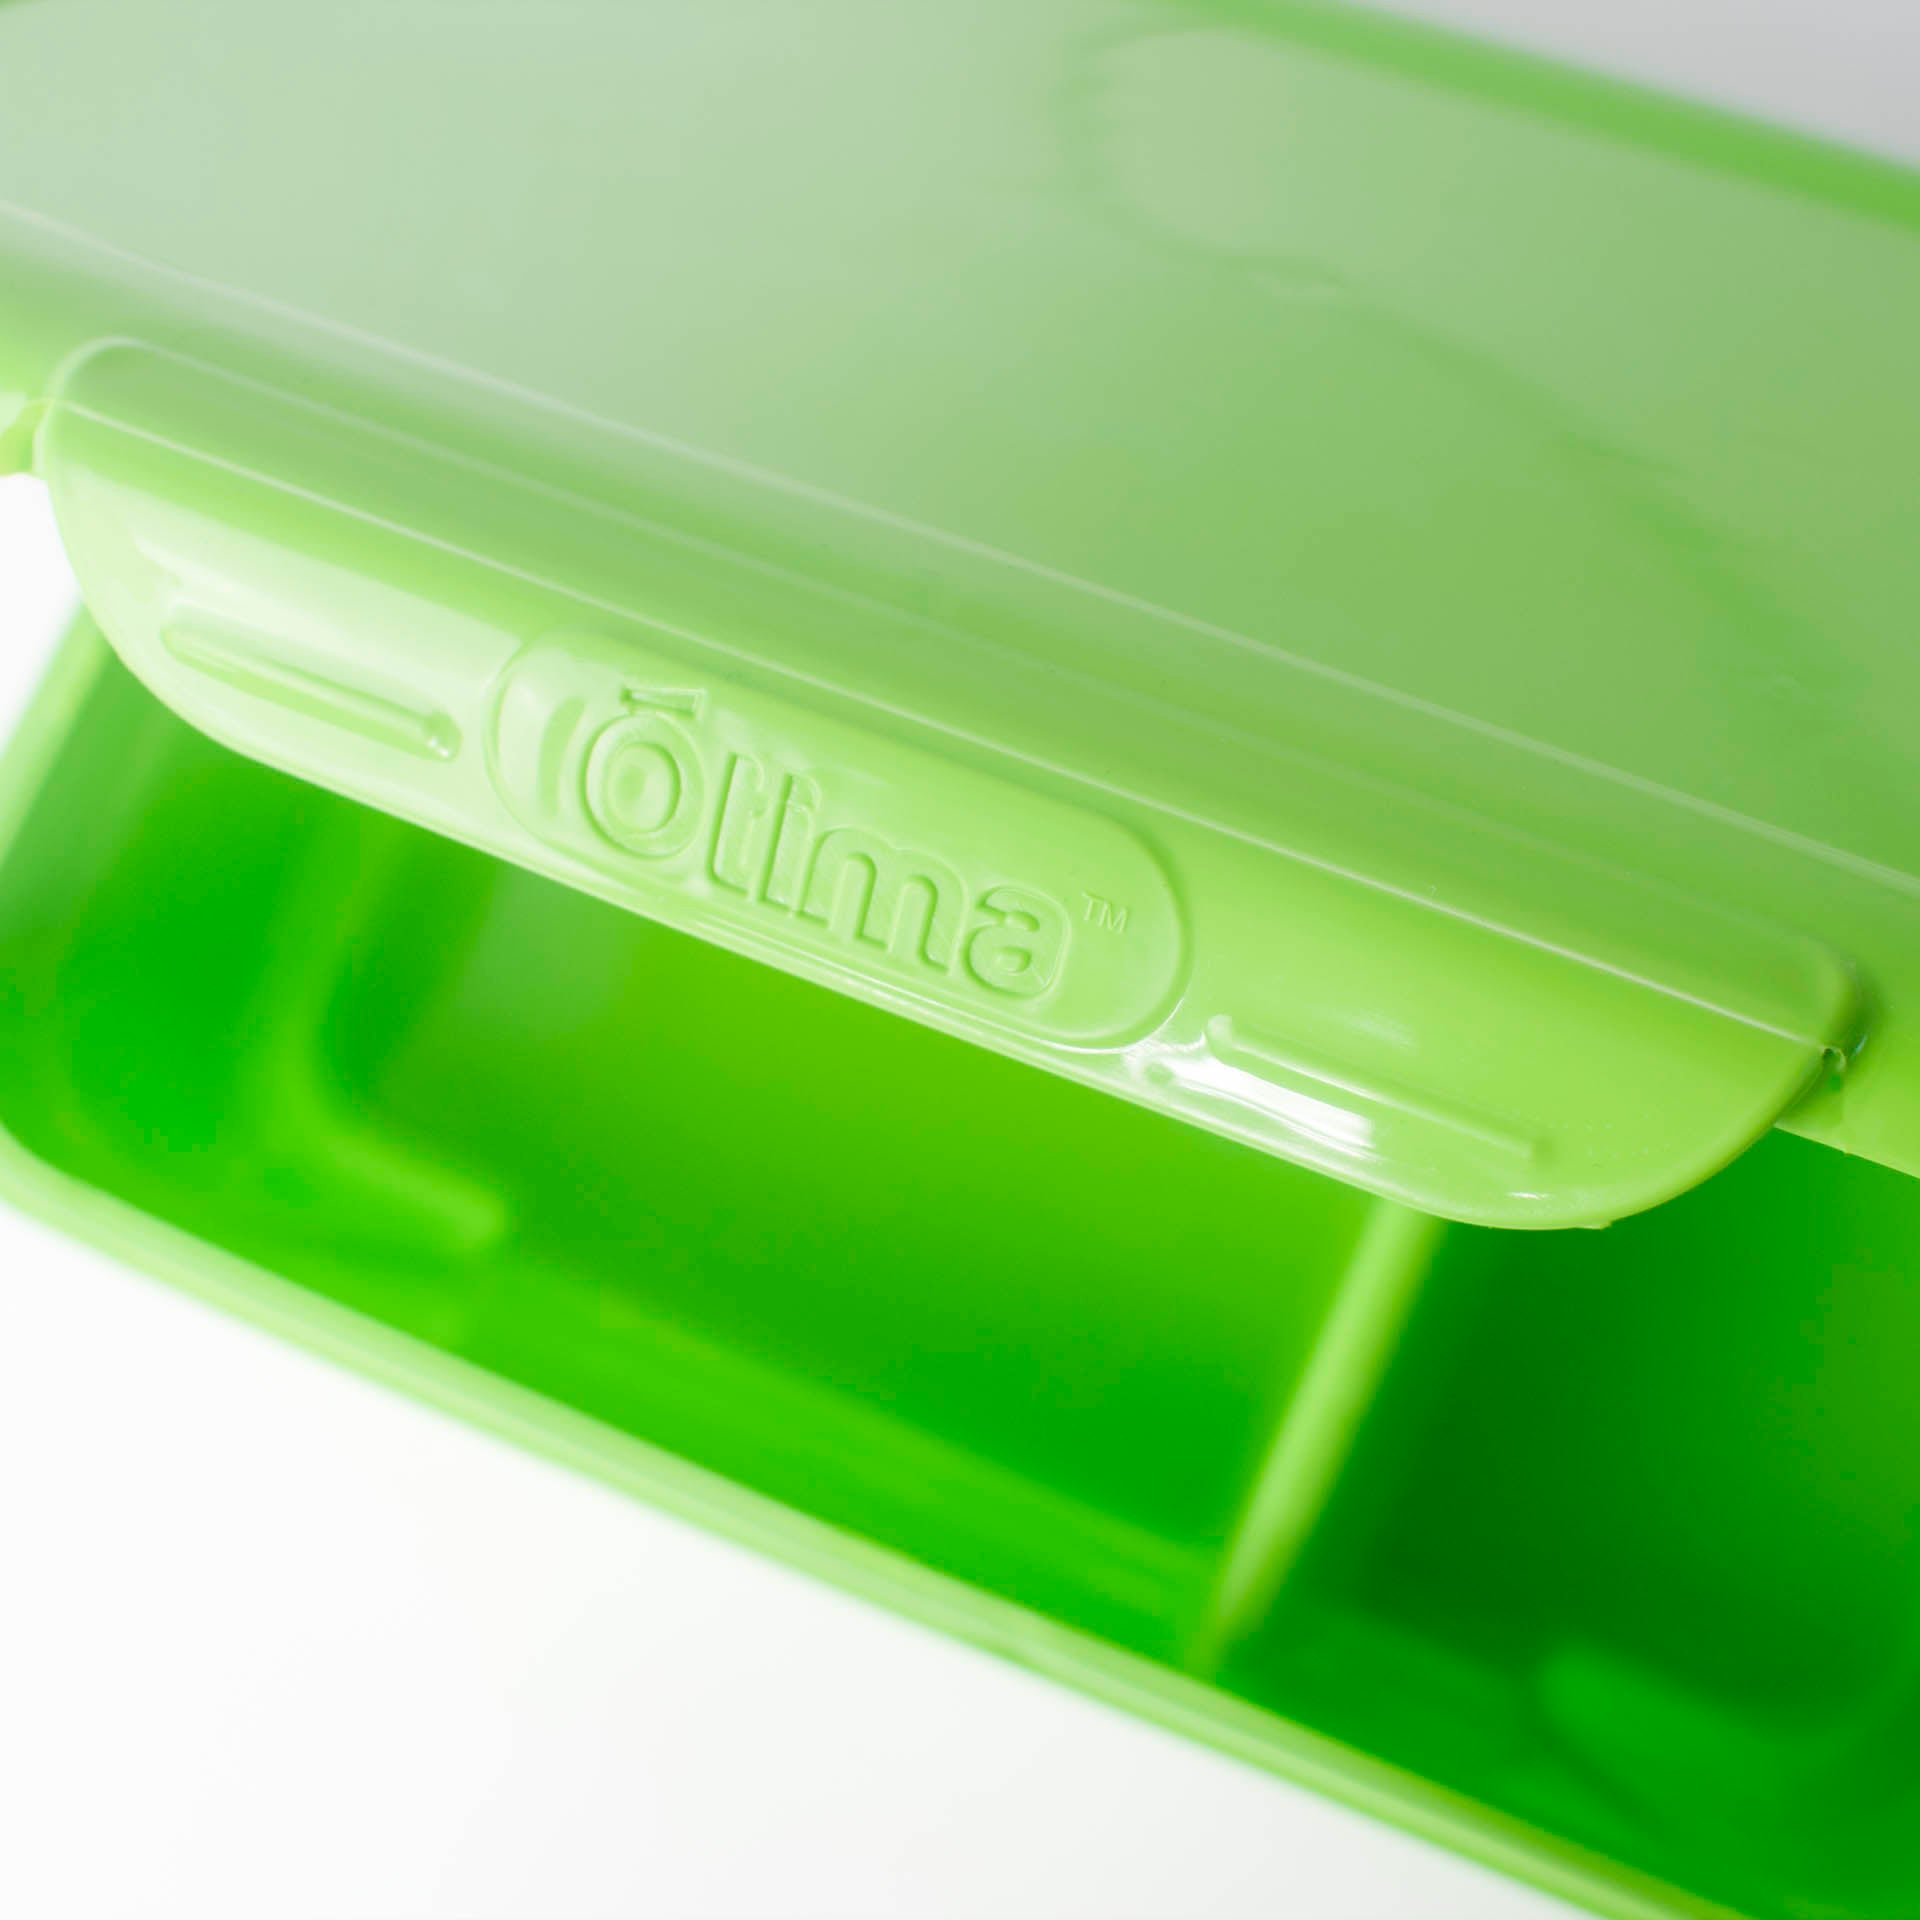 Otima Plastic Lunch Box 1.9L Flip-Top with Division